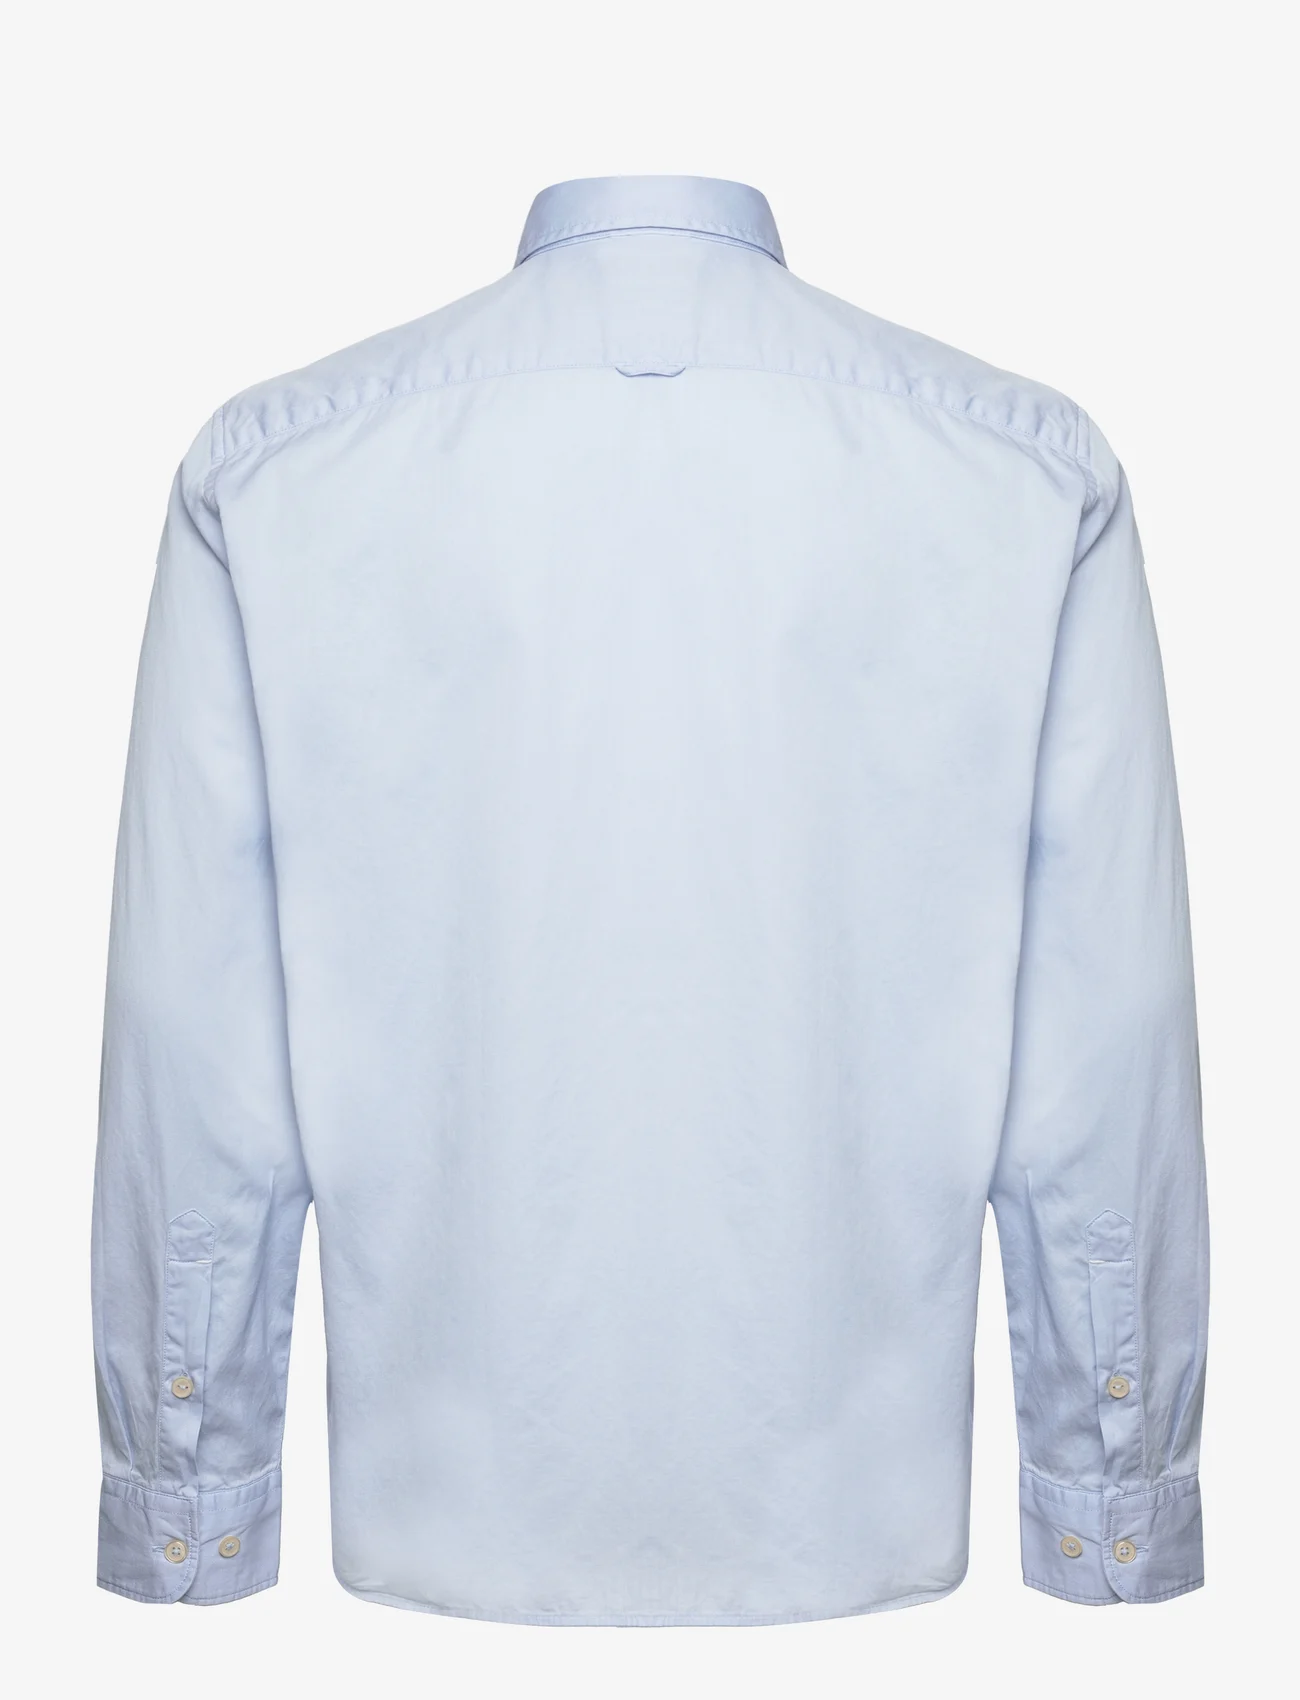 Marc O'Polo - SHIRTS/BLOUSES LONG SLEEVE - basic skjorter - airblue - 1